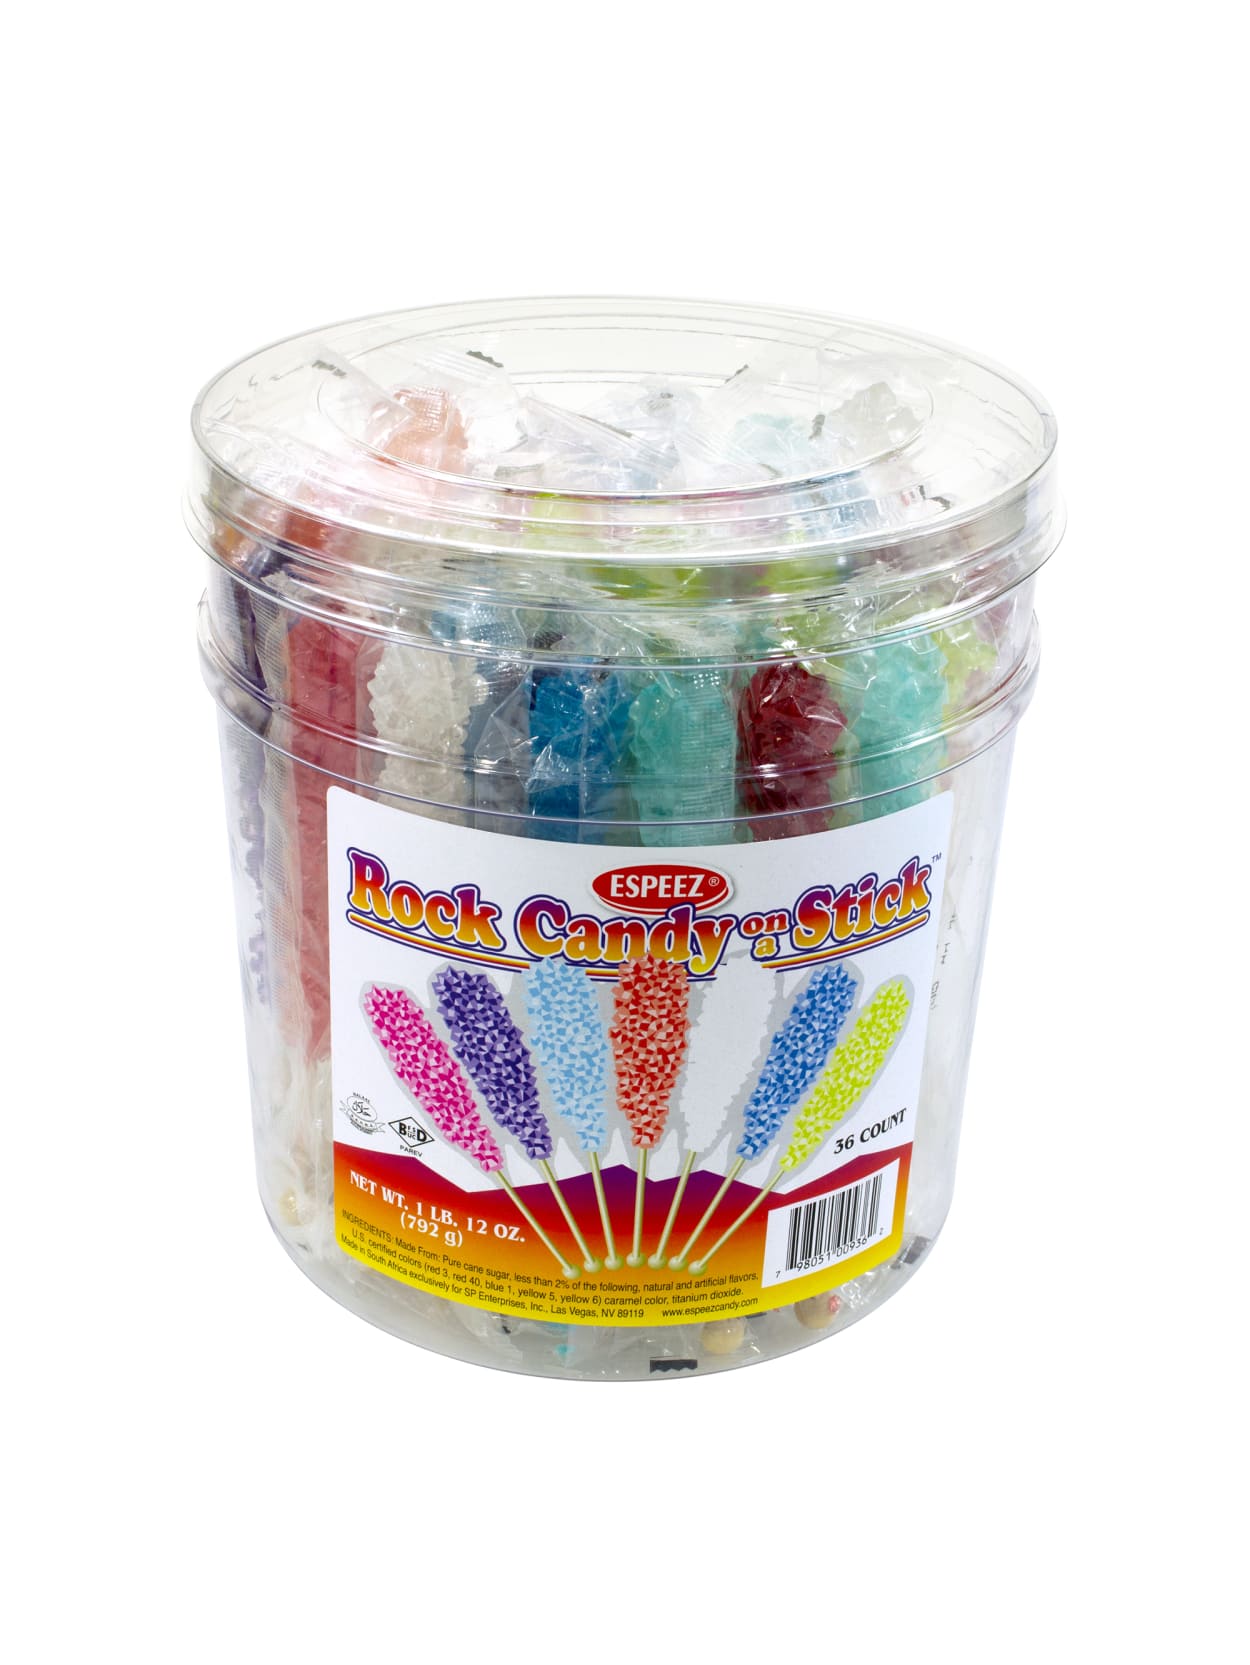 Espeez Rock Candy Sticks Assorted Flavors Tub Of 36 Office Depot,What Is Cassava Cake